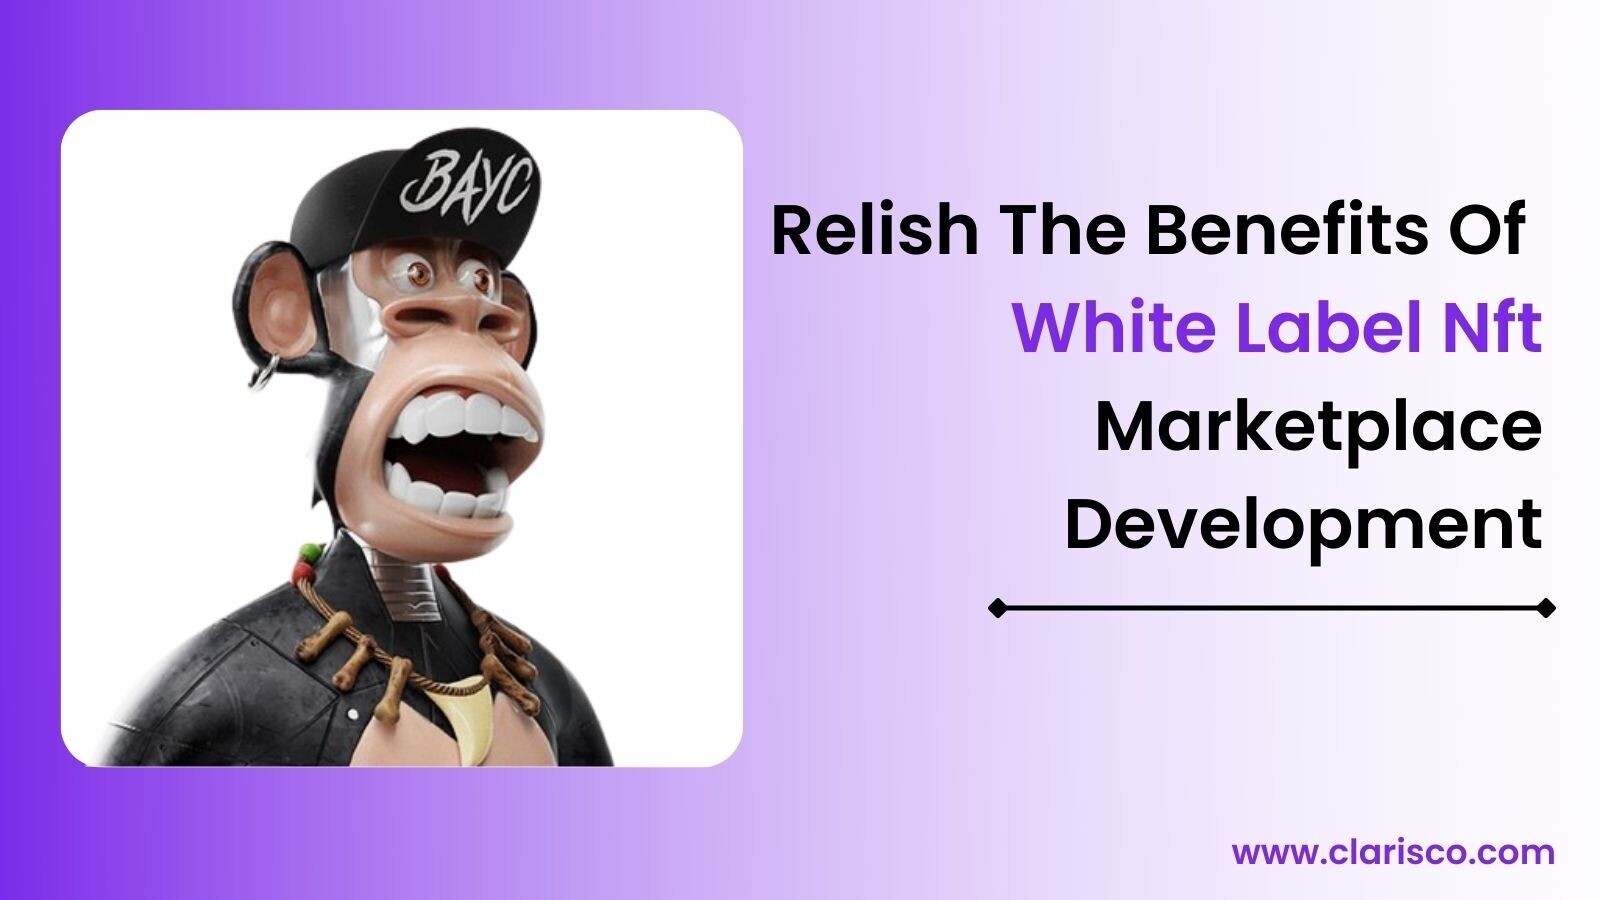 Relish-The-Benefits-Of-White-Label-Nft-Marketplace-Development.jpg